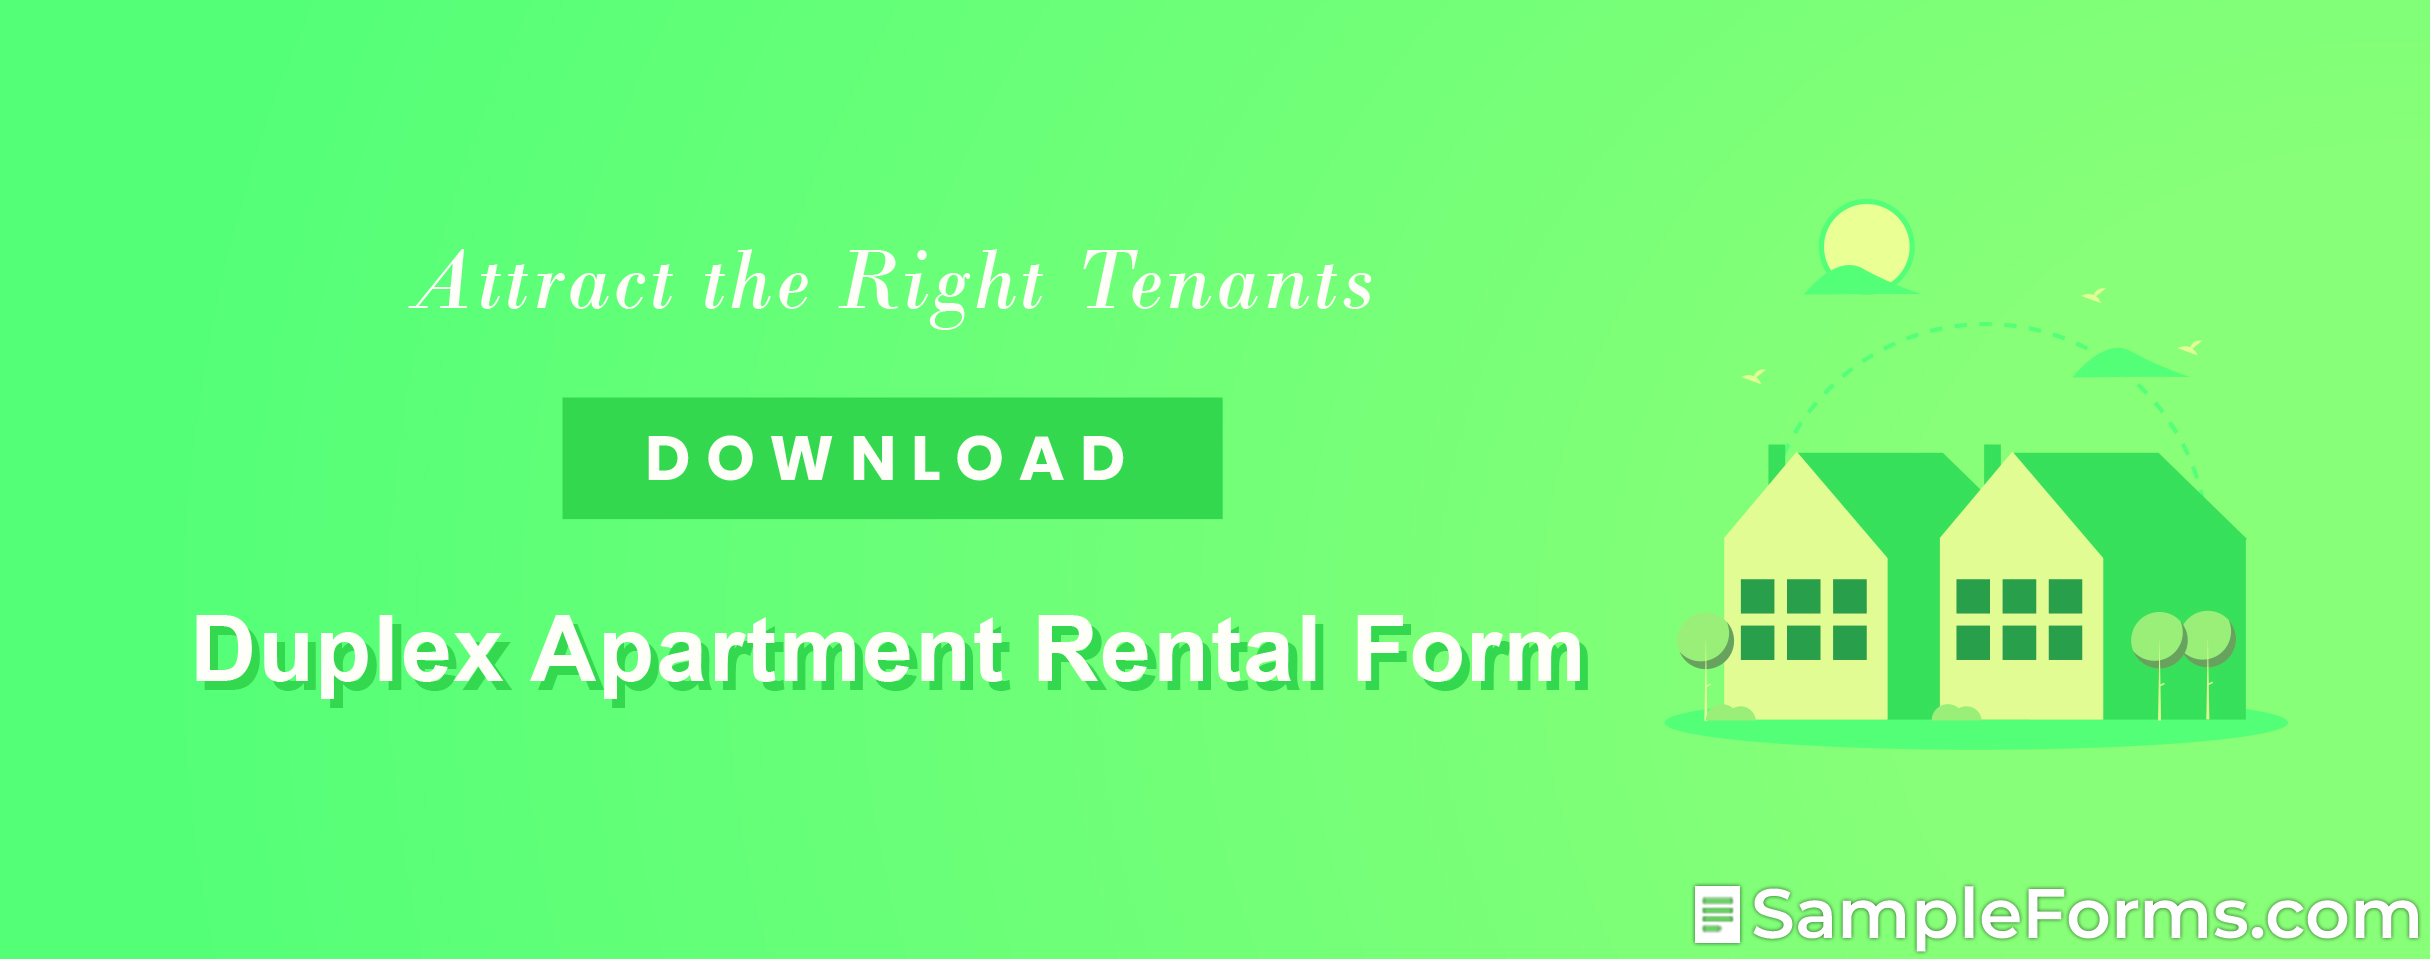 Duplex Apartment Rental Form